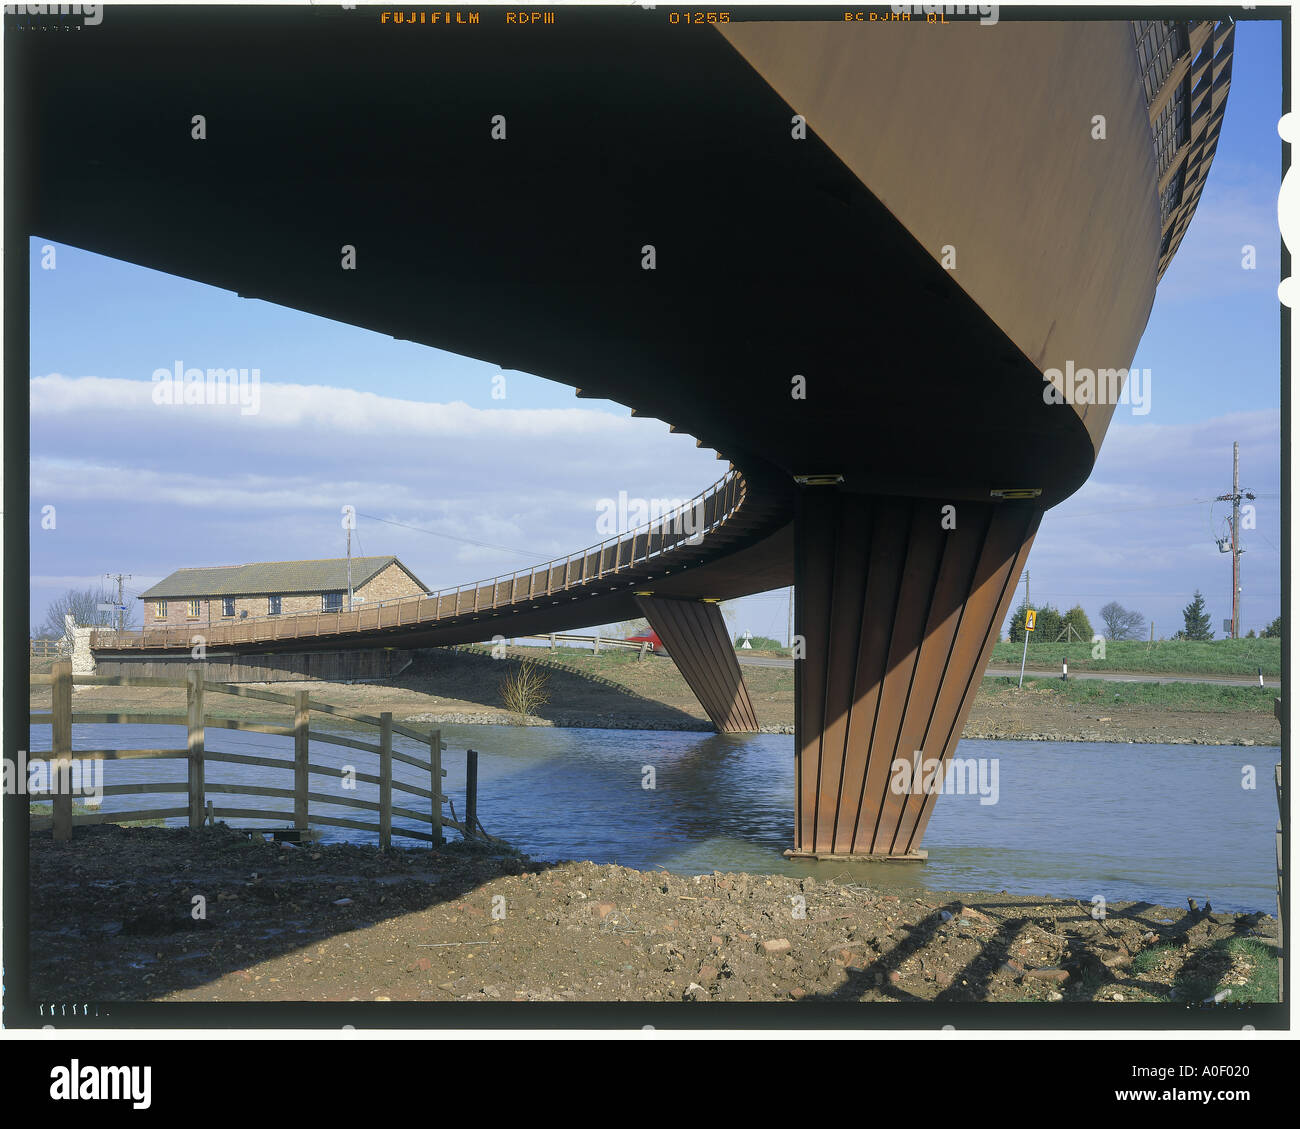 Box girder bridge hi-res stock photography and images - Alamy